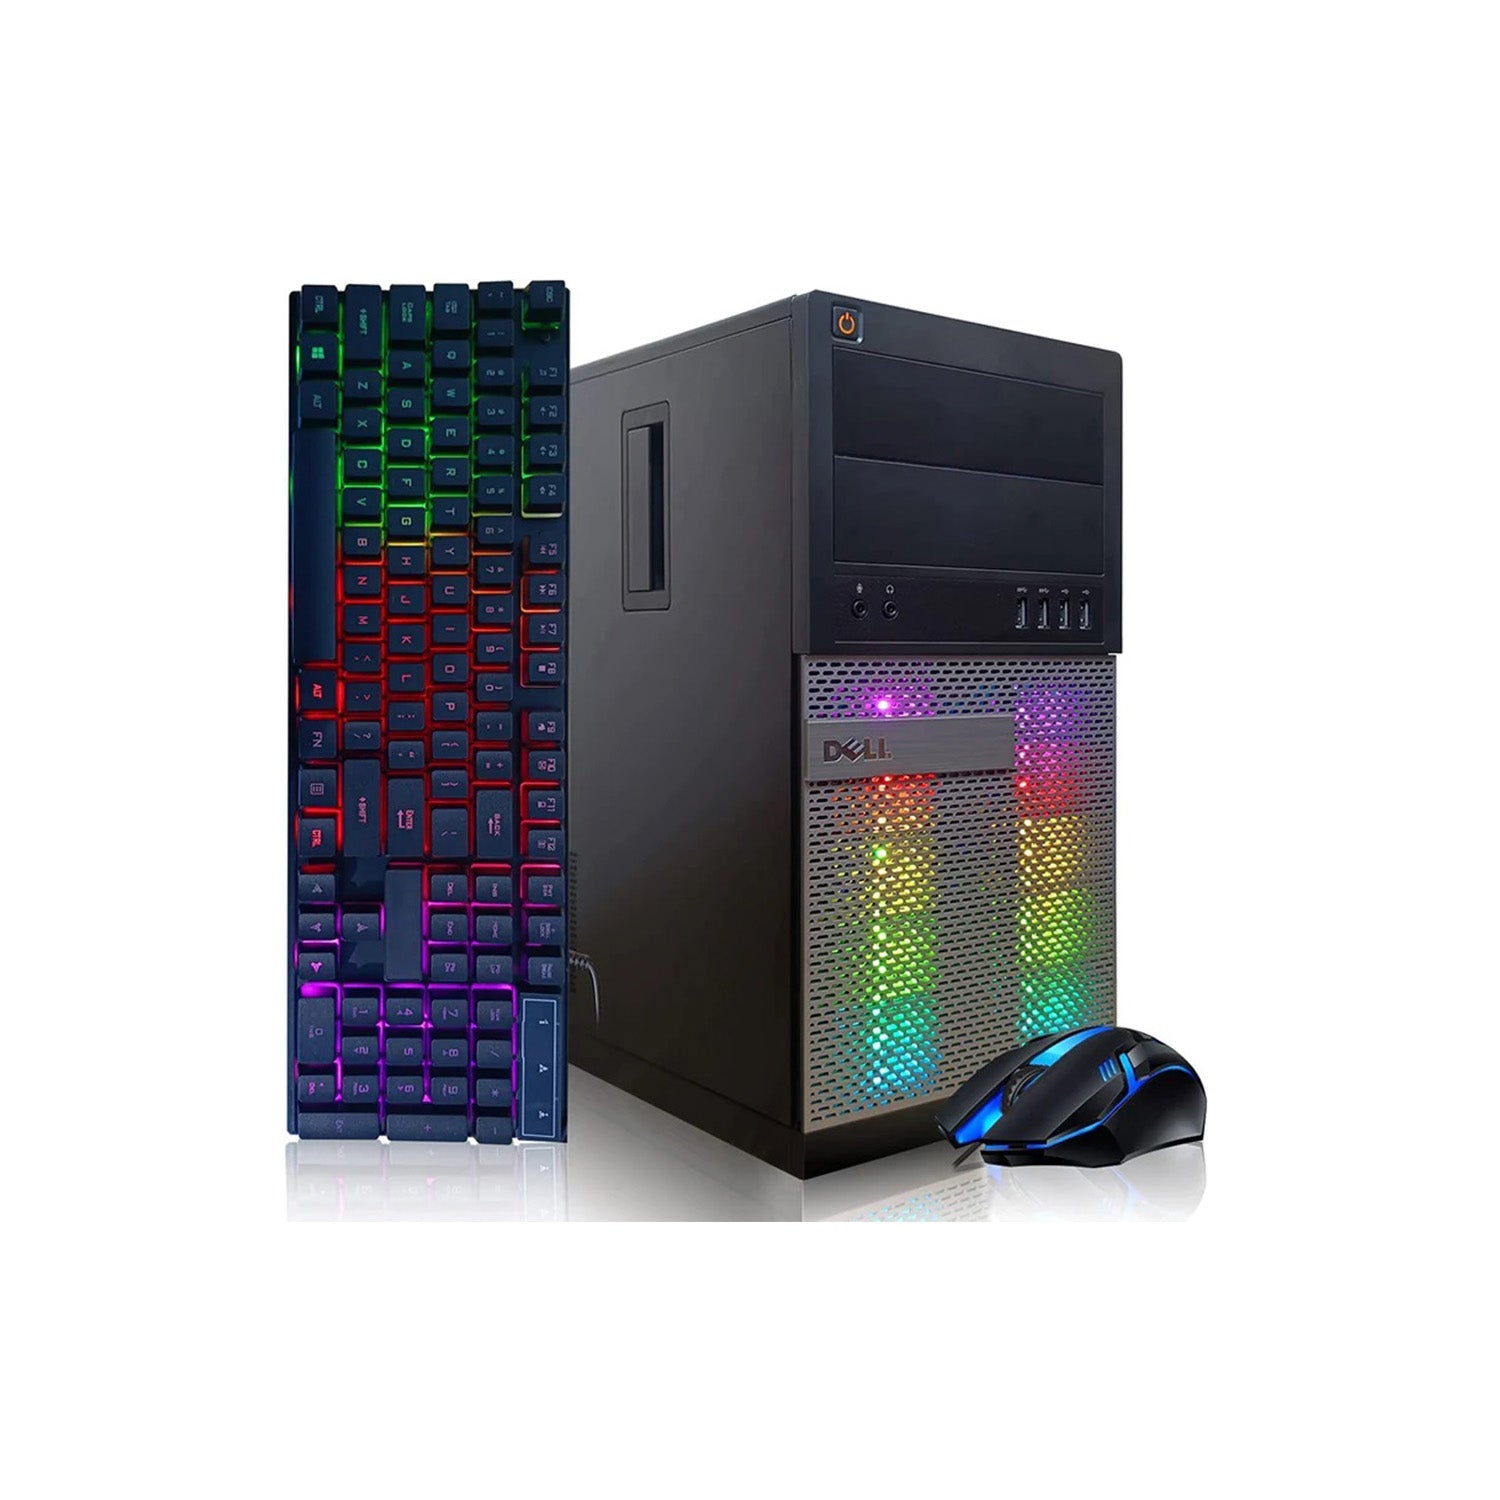 DELL RGB Gaming Desktop Computer, Intel Quad Core, 16GB Memory, 512GB SSD + 3TB HDD, Keyboard & Mouse, 600M WiFi Bluetooth, Win 10 Pro (Renewed)